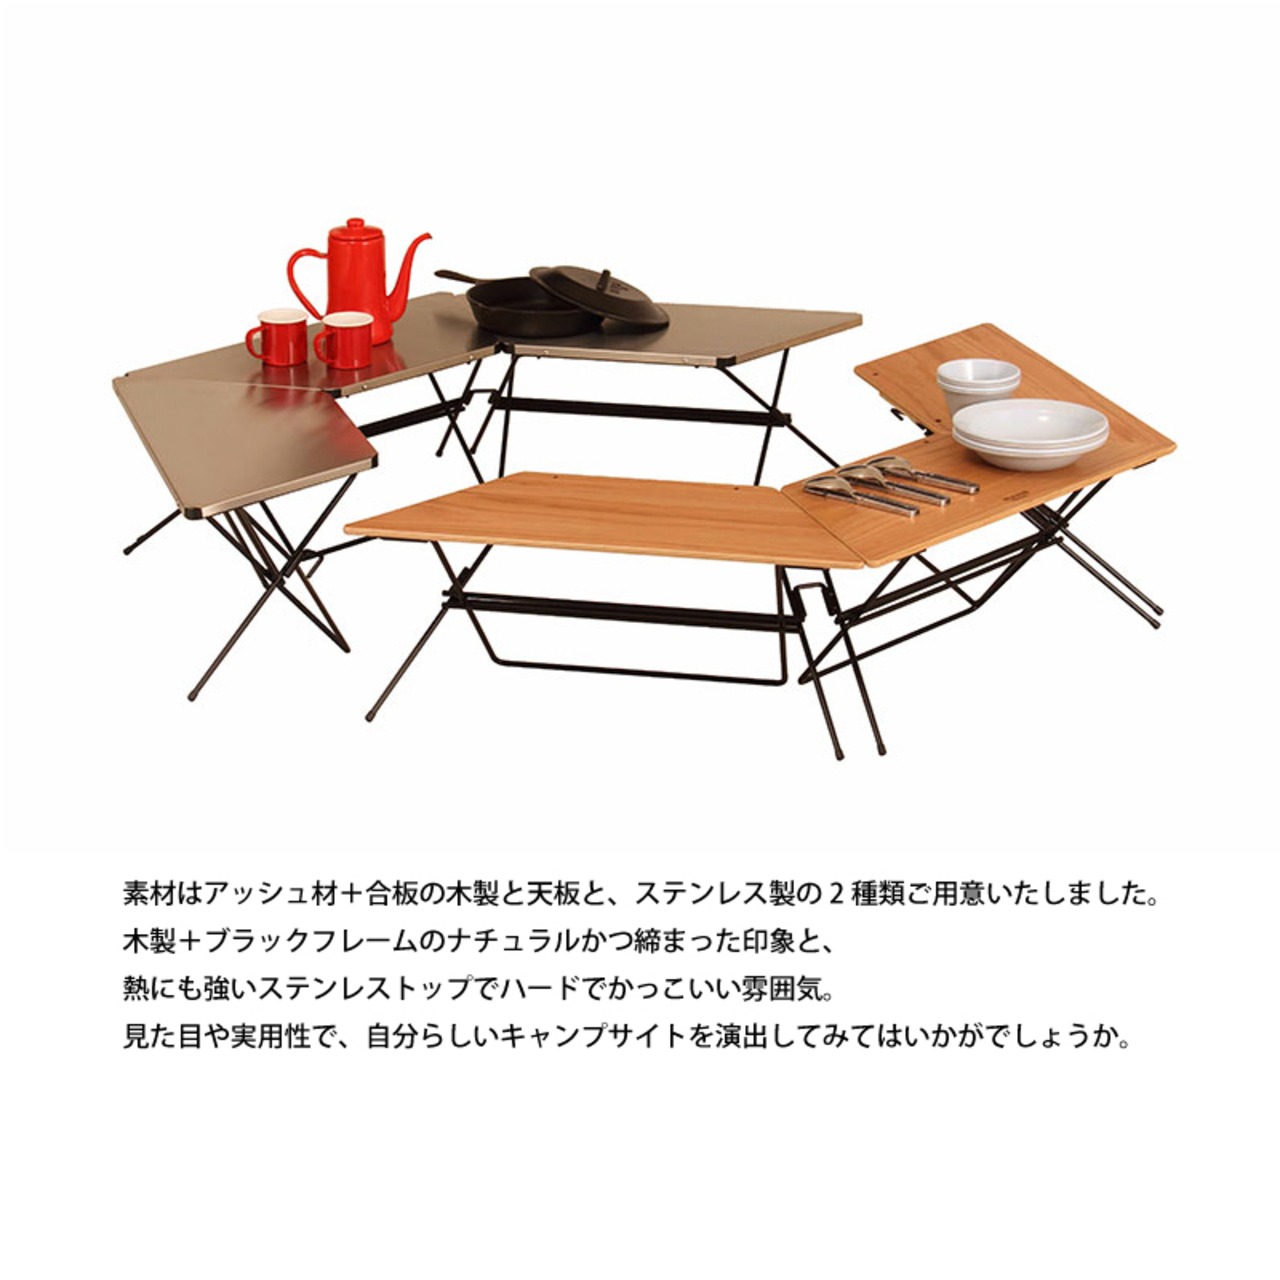 HangOut (ハングアウト) FRT Arch Table Single (Stainless Top) アーチ テーブル シングル ステンレス トップ